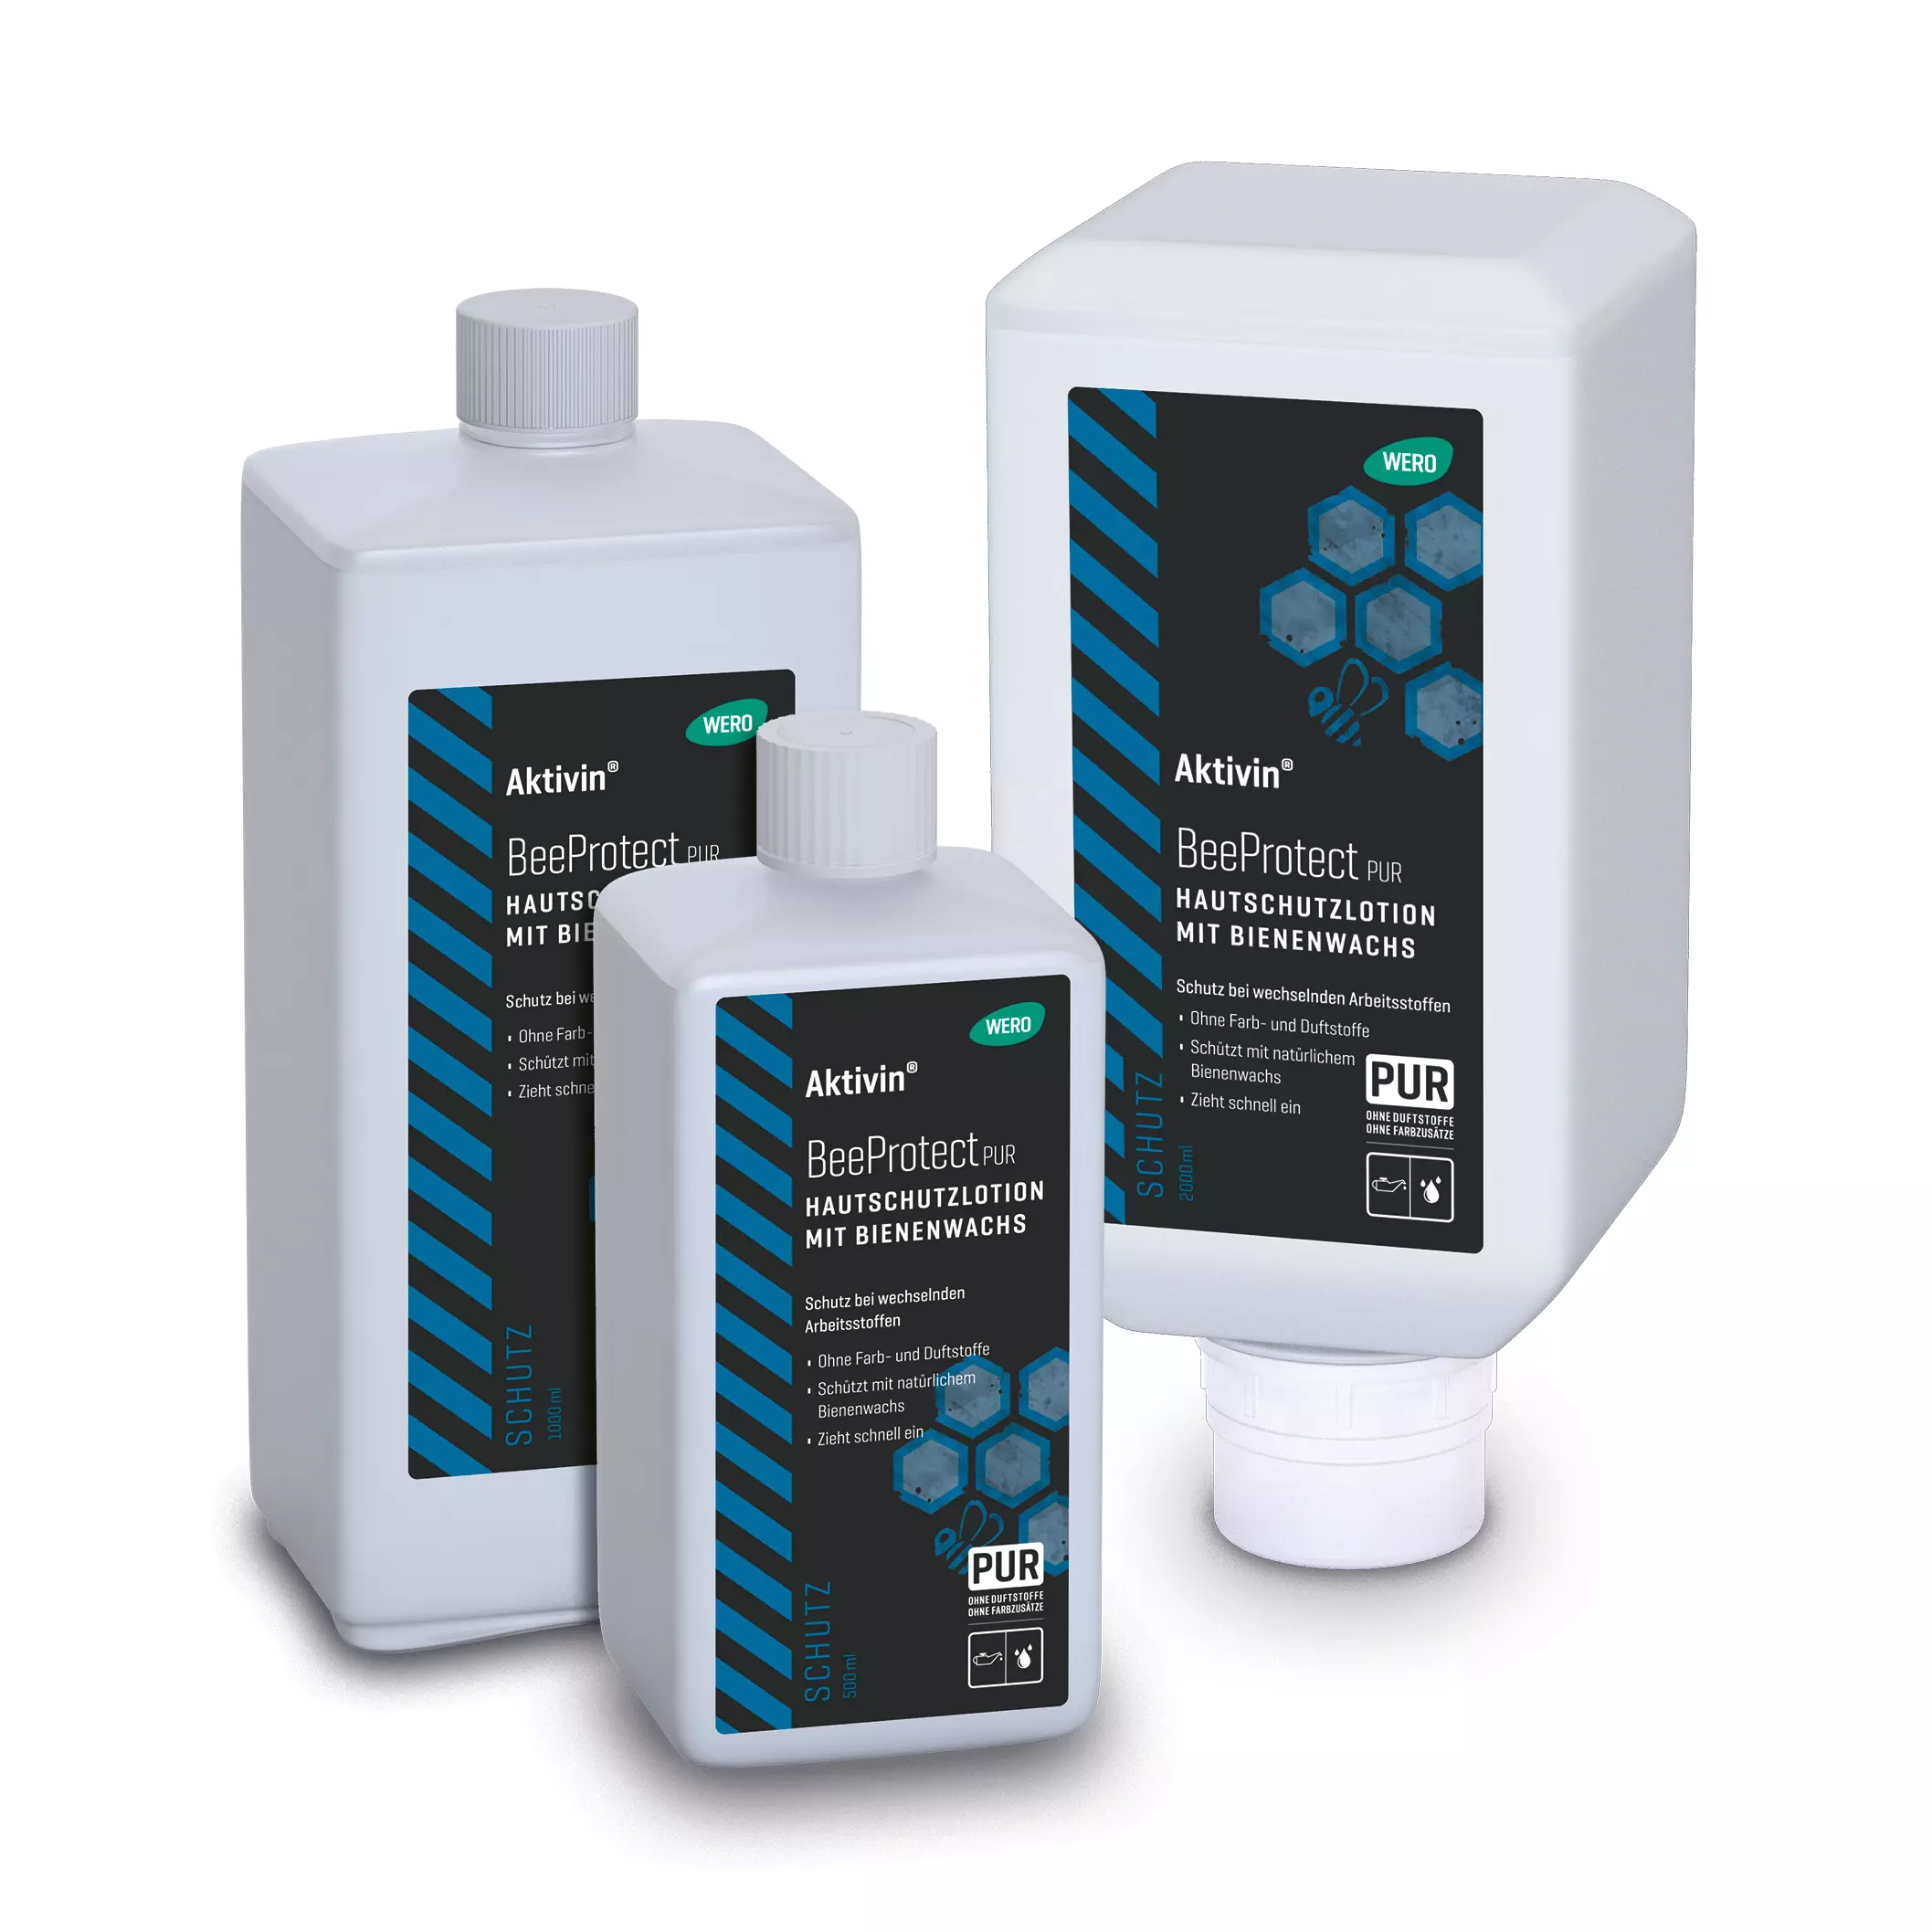 Hautschutzlotion Aktivin® BeeProtect PUR - Euroflasche, 500 ml